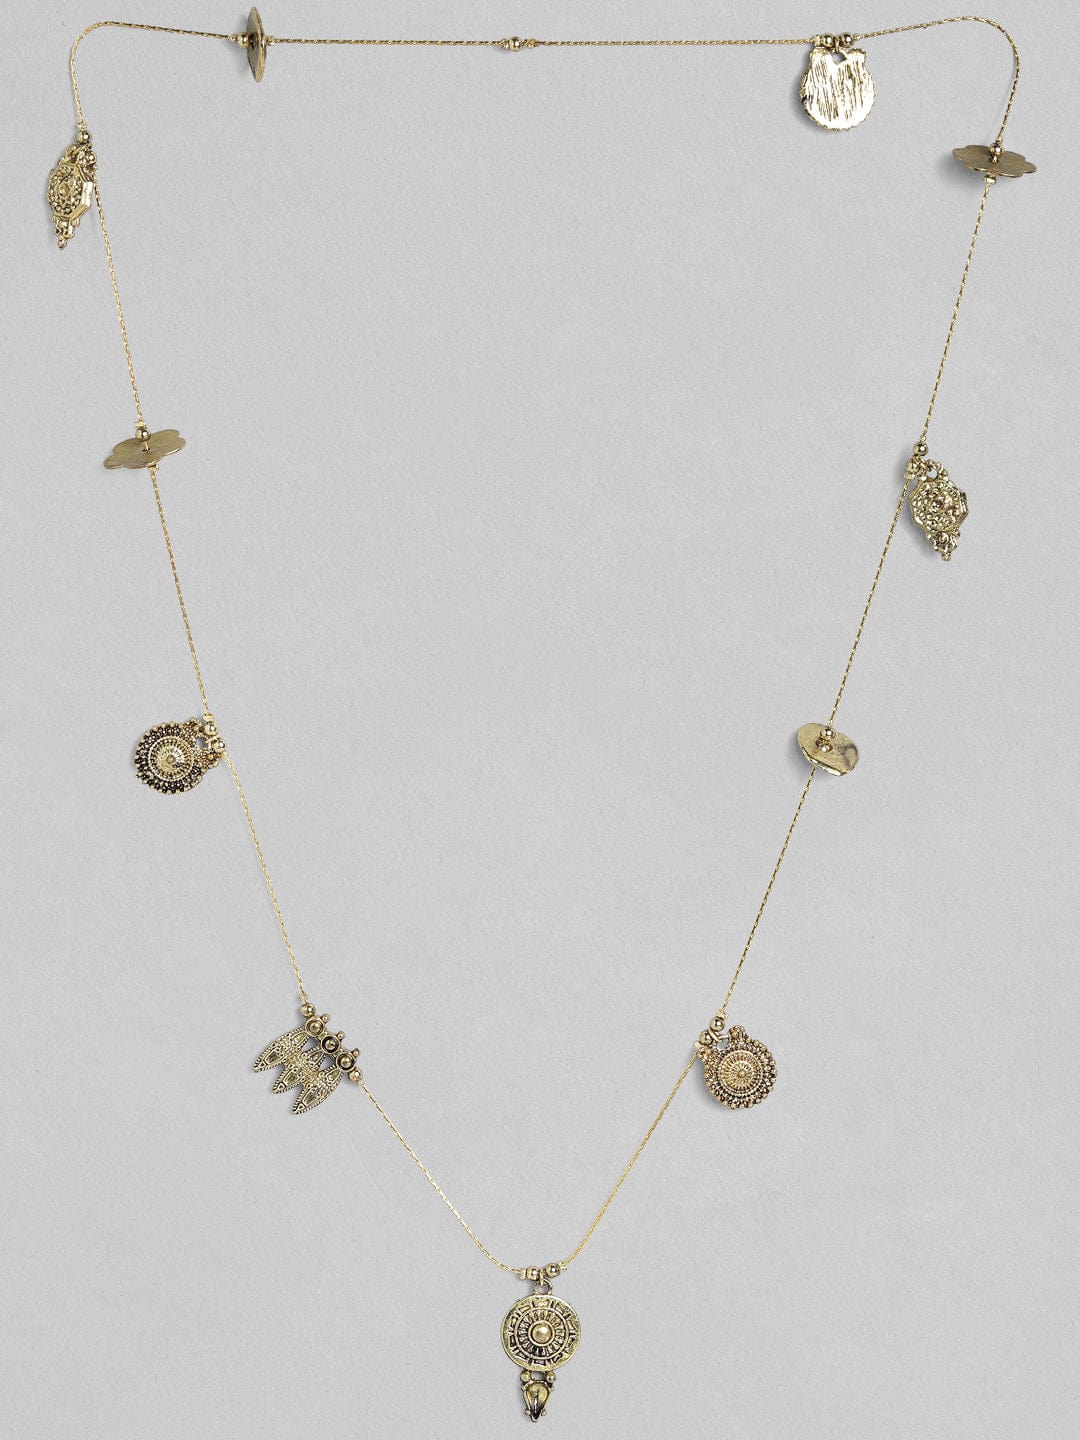 Futhark Rune Pendant - 14K Gold - Andrea Shelley Designs